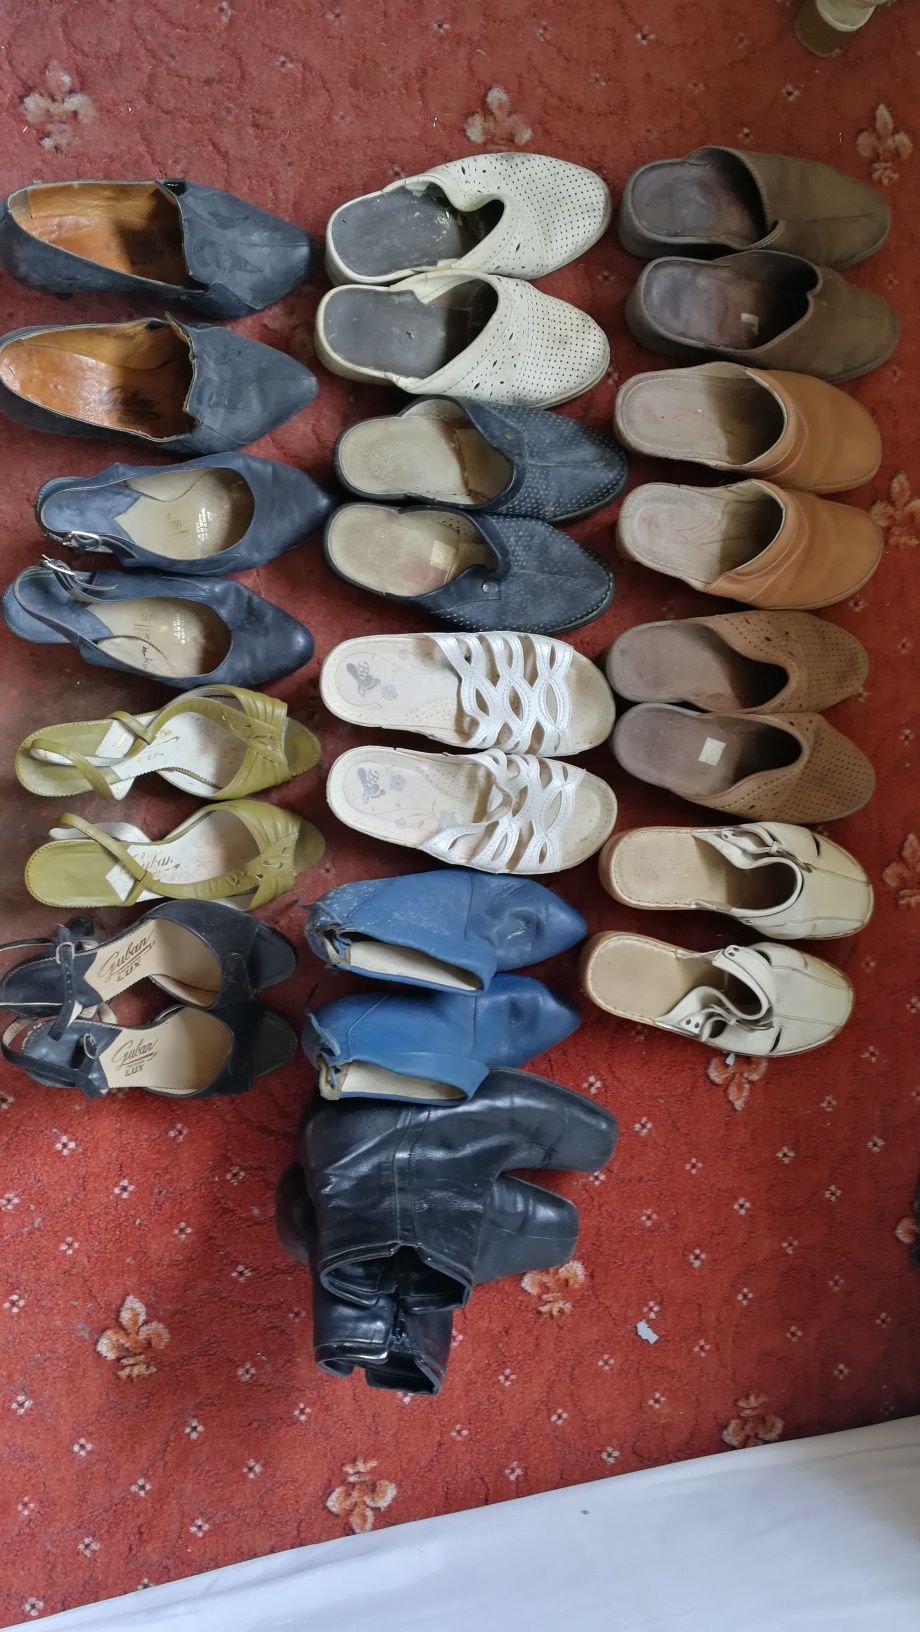 Preț toate - 15 pereche sandale, saboti, botine, cizme